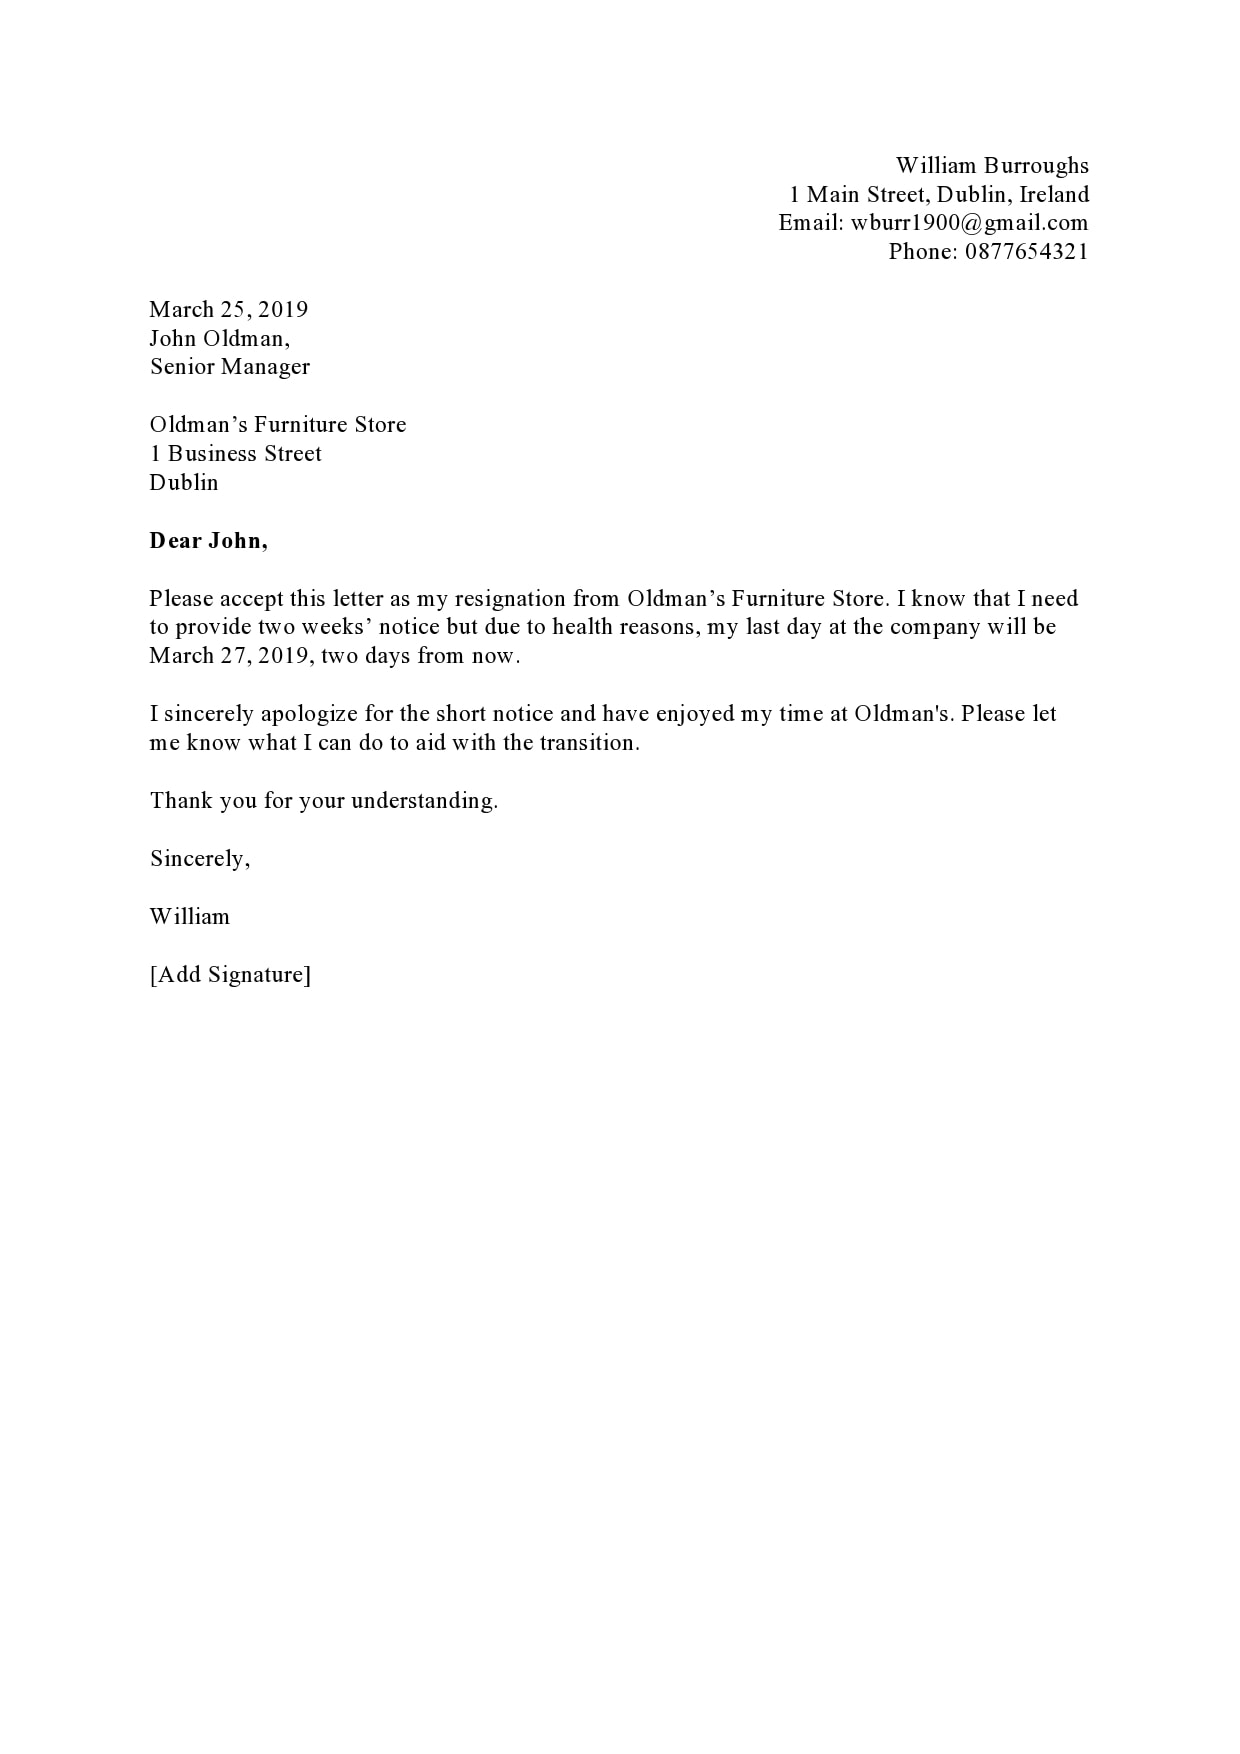 Short Notice Resignation Letter Template